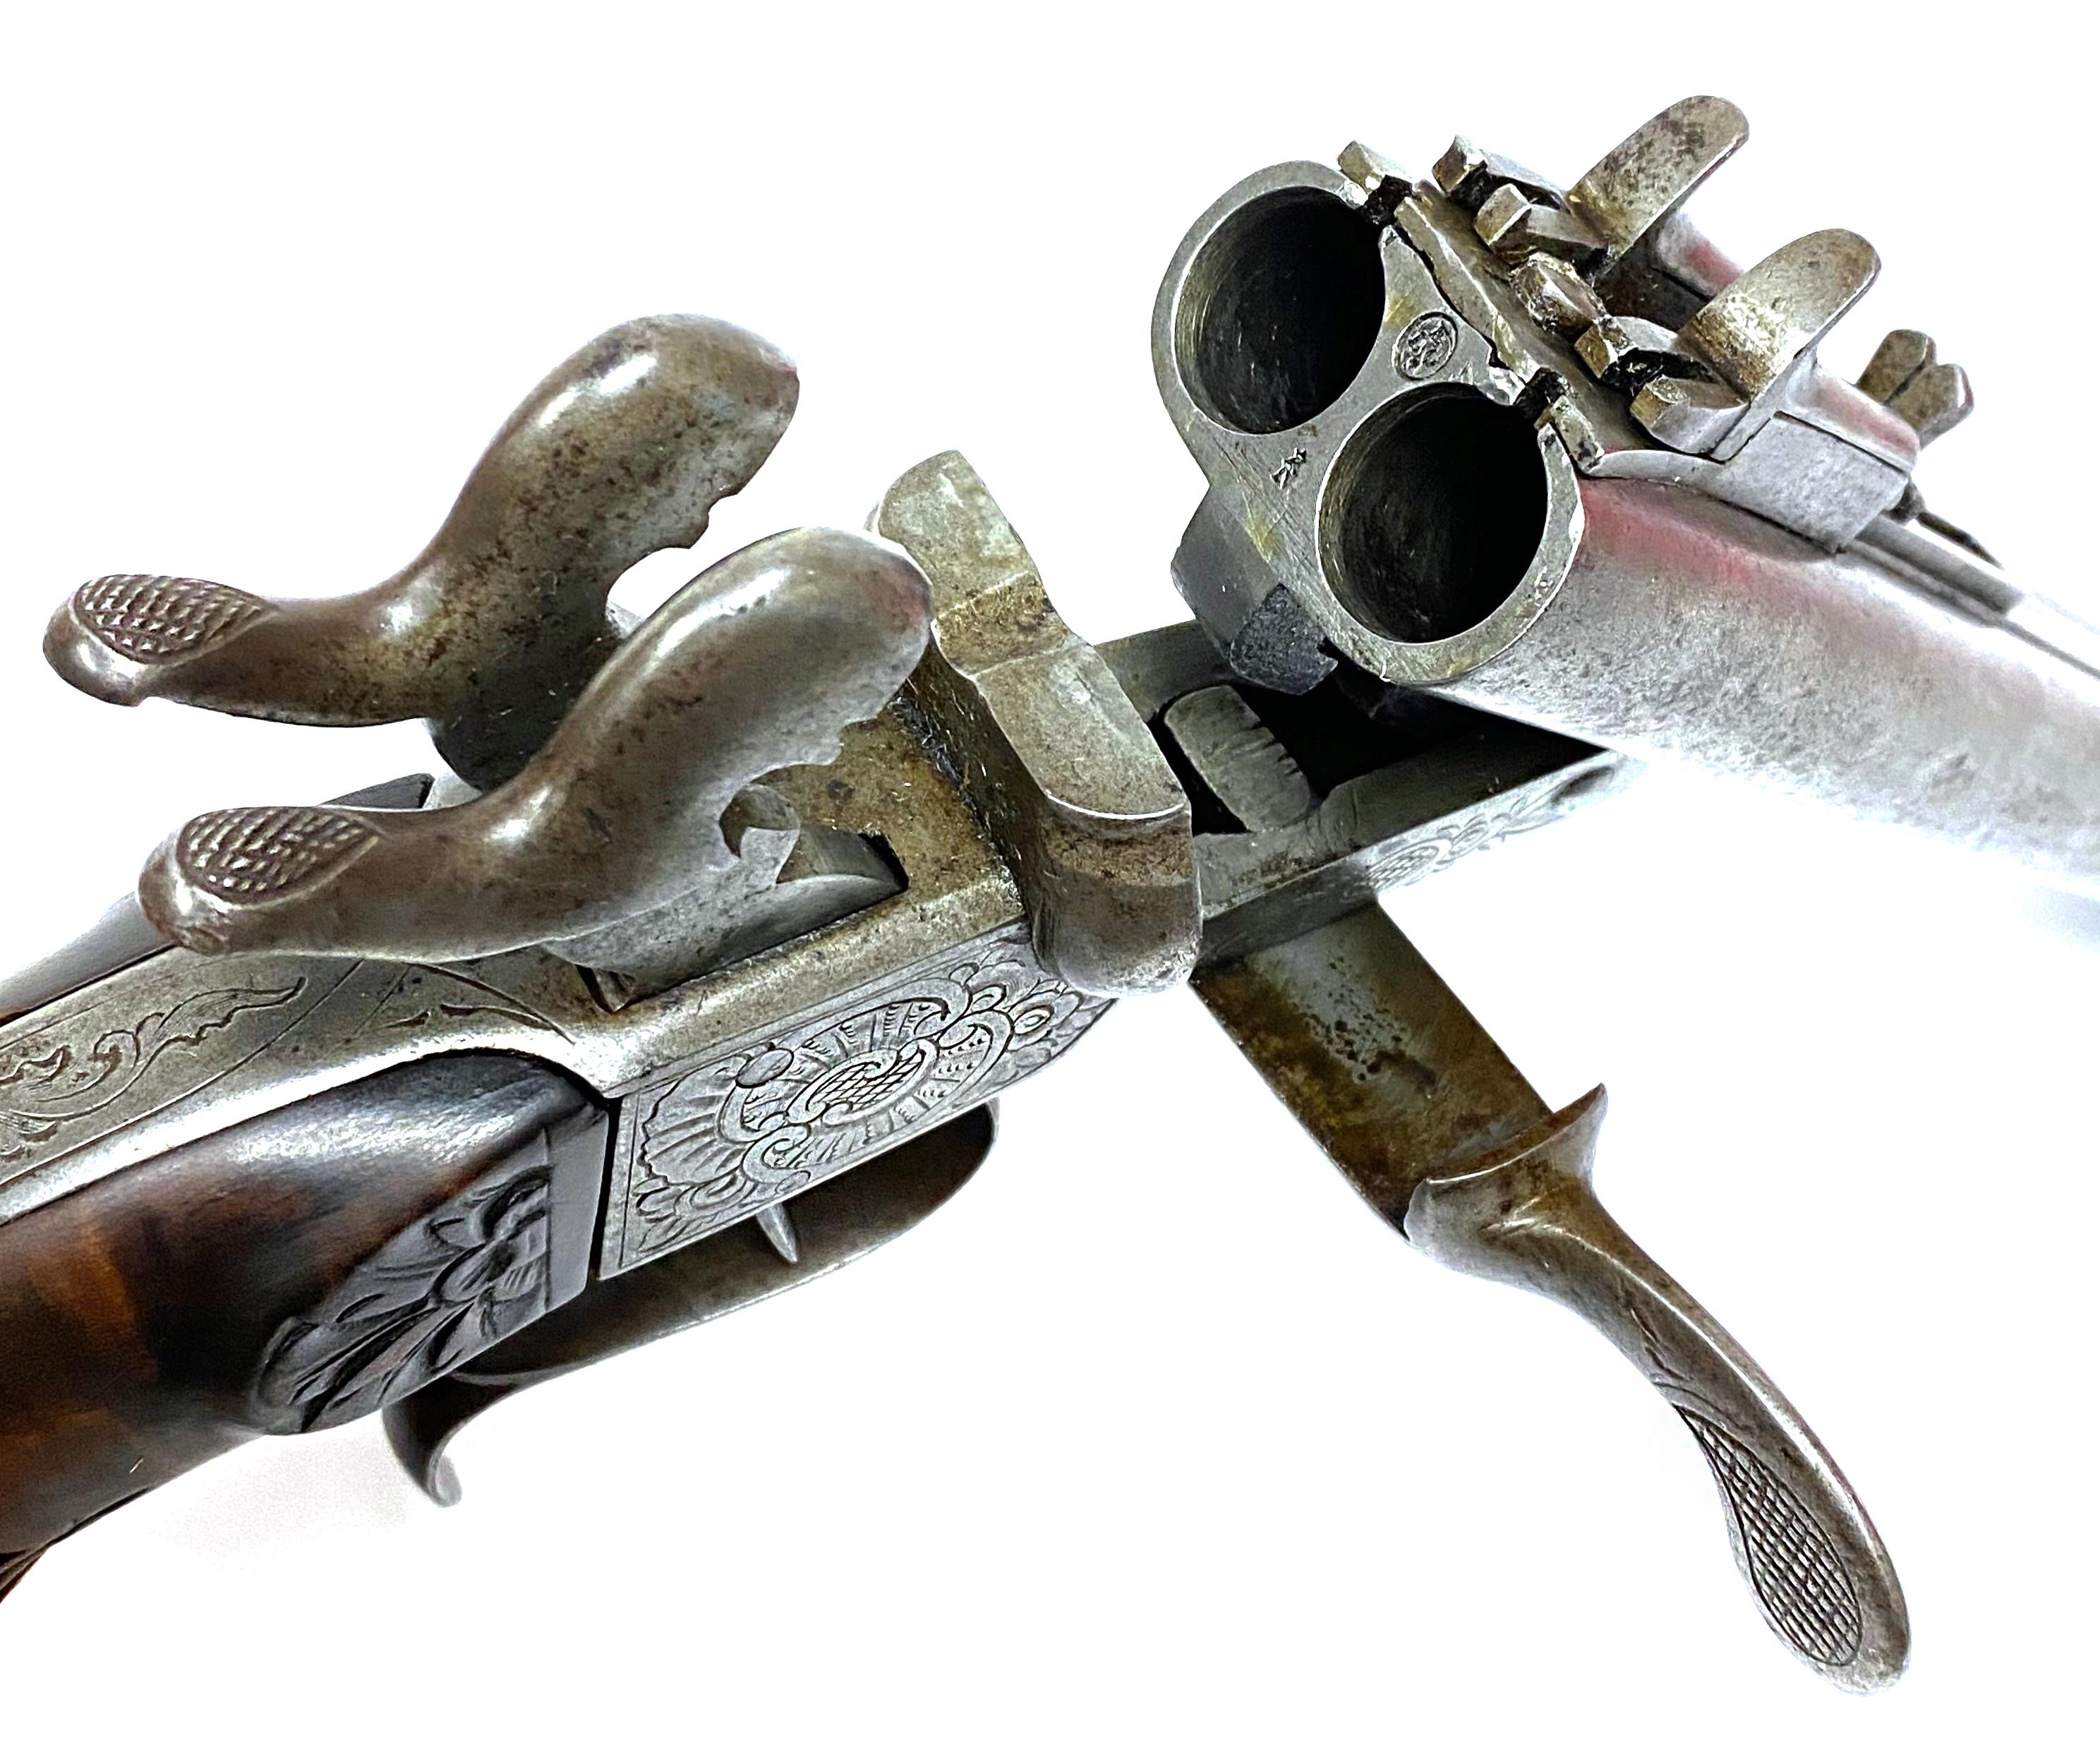 Continental Belgian Boxlock Pinfire Double Barrel Pistol, ca. 1840